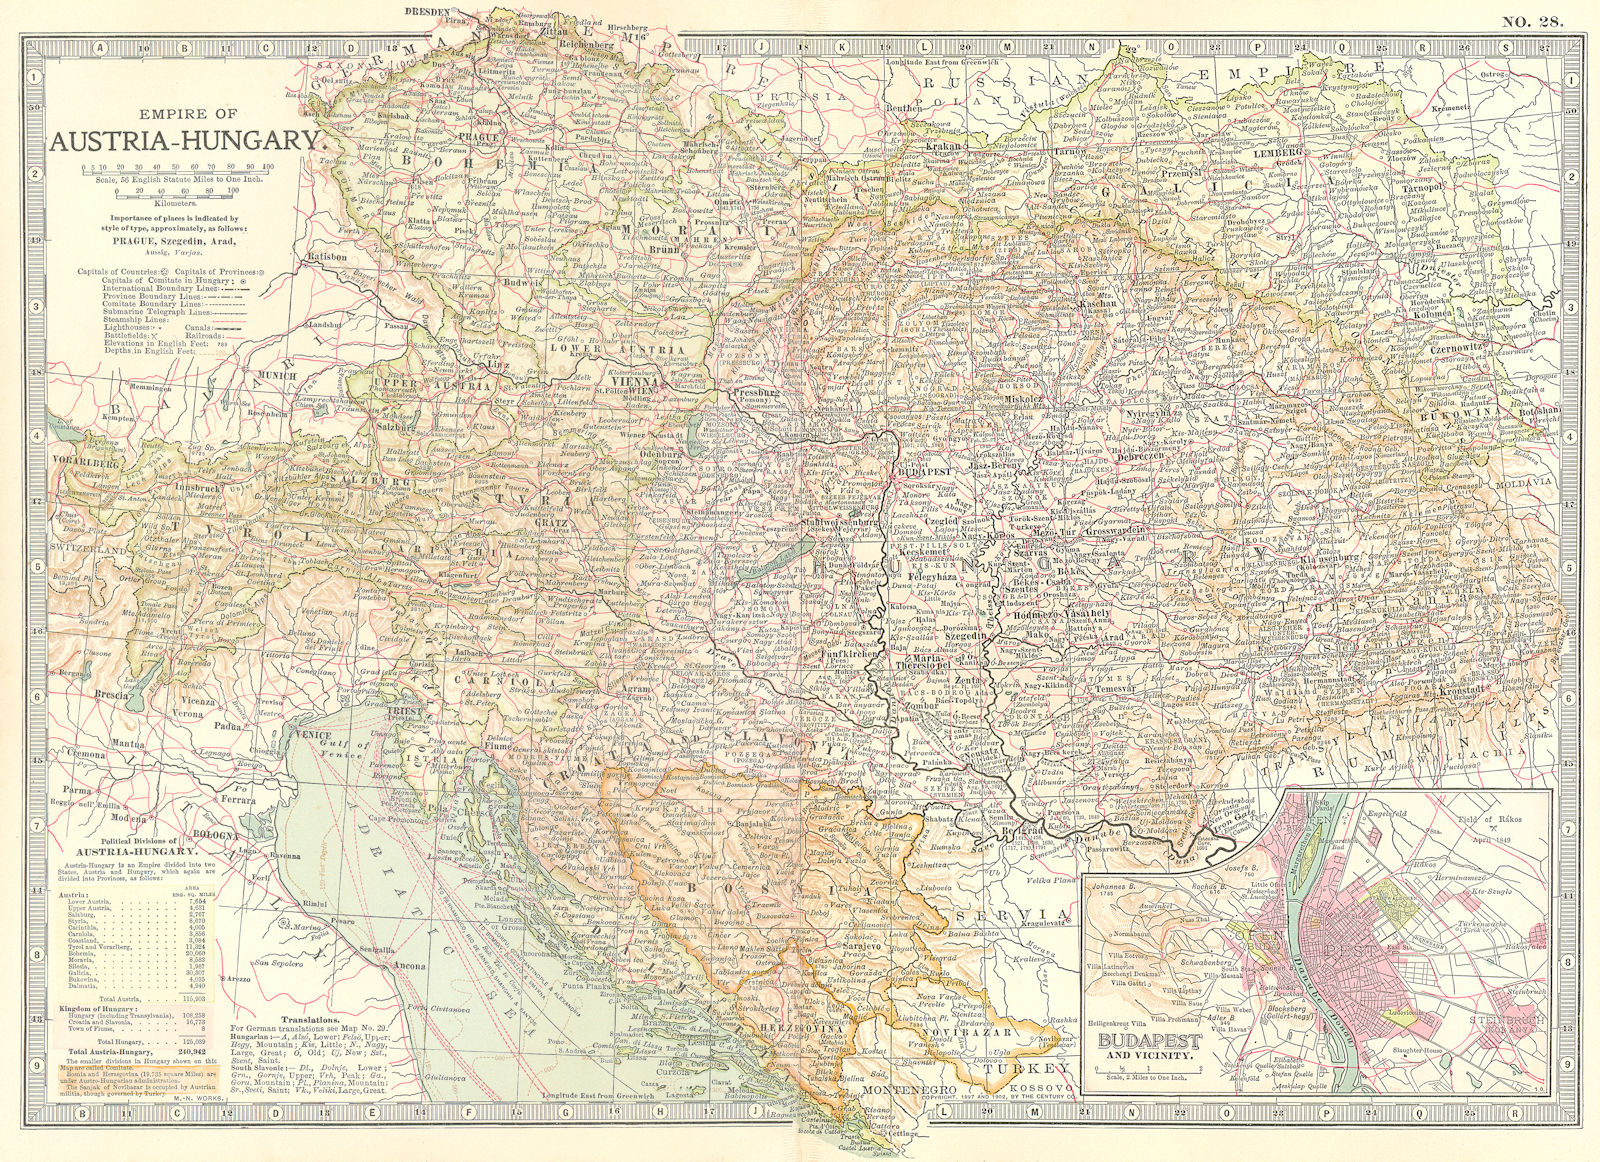 Associate Product AUSTRIA-HUNGARY. Empire; Budapest; Bosnia Croatia Slavonia Dalmatia 1903 map